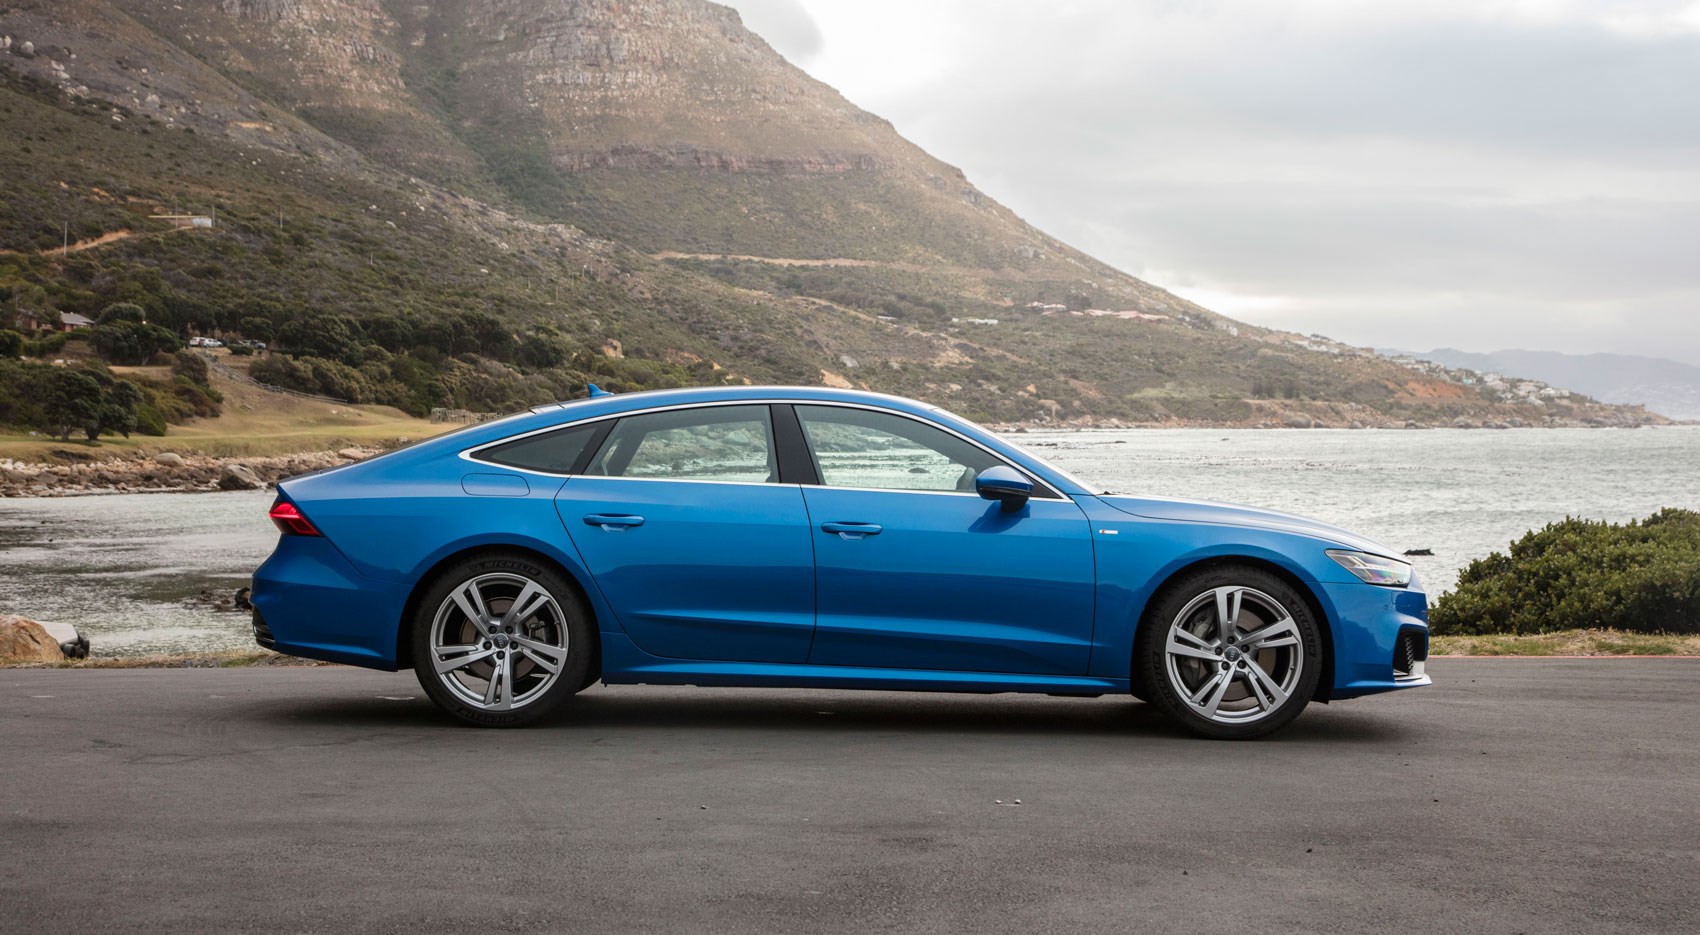 New Audi A7 (2018) review: the sleek exec driven | CAR ...